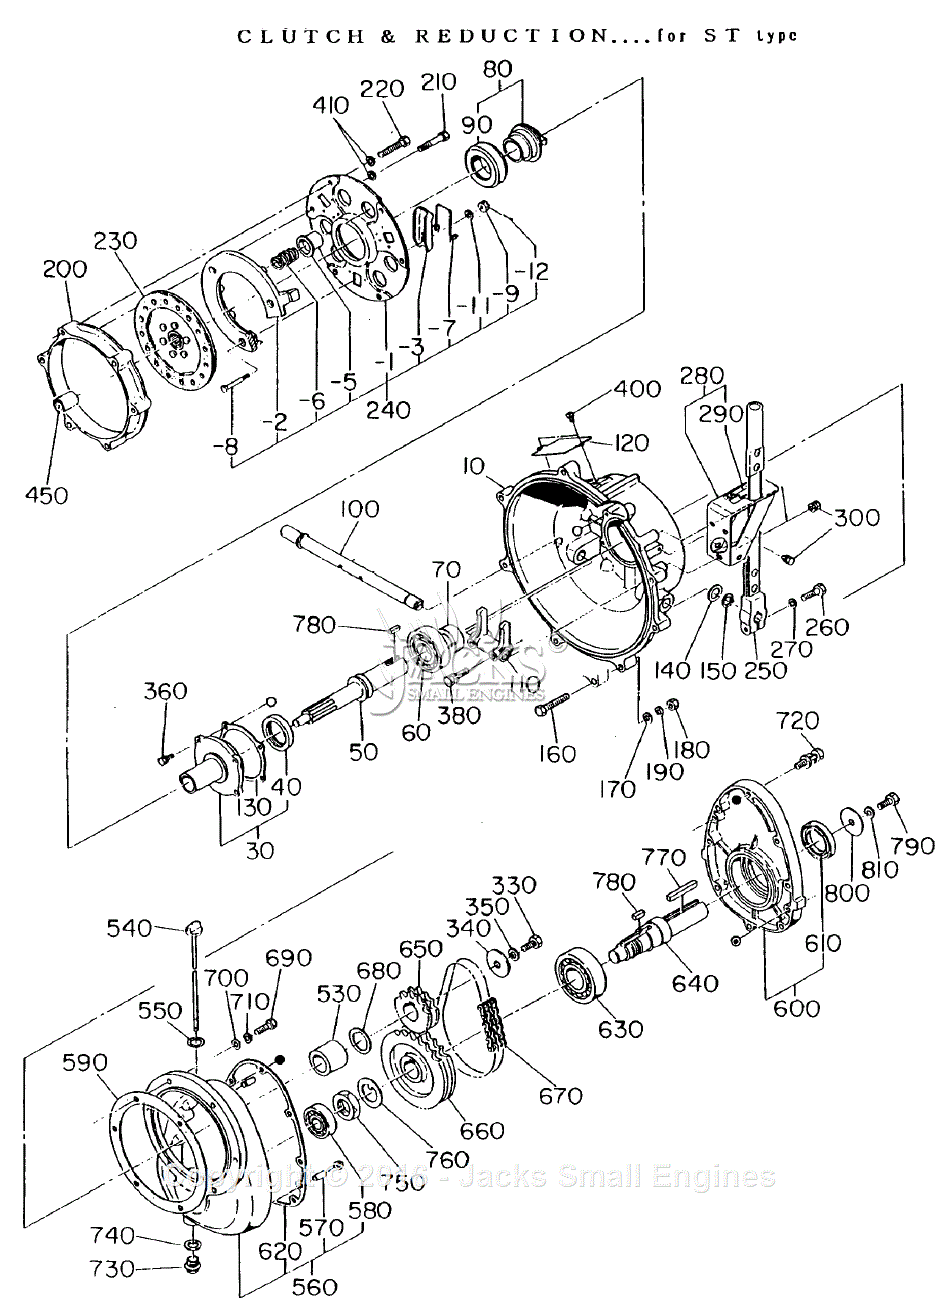 John Deere 790 clutch return spring/parts diagram